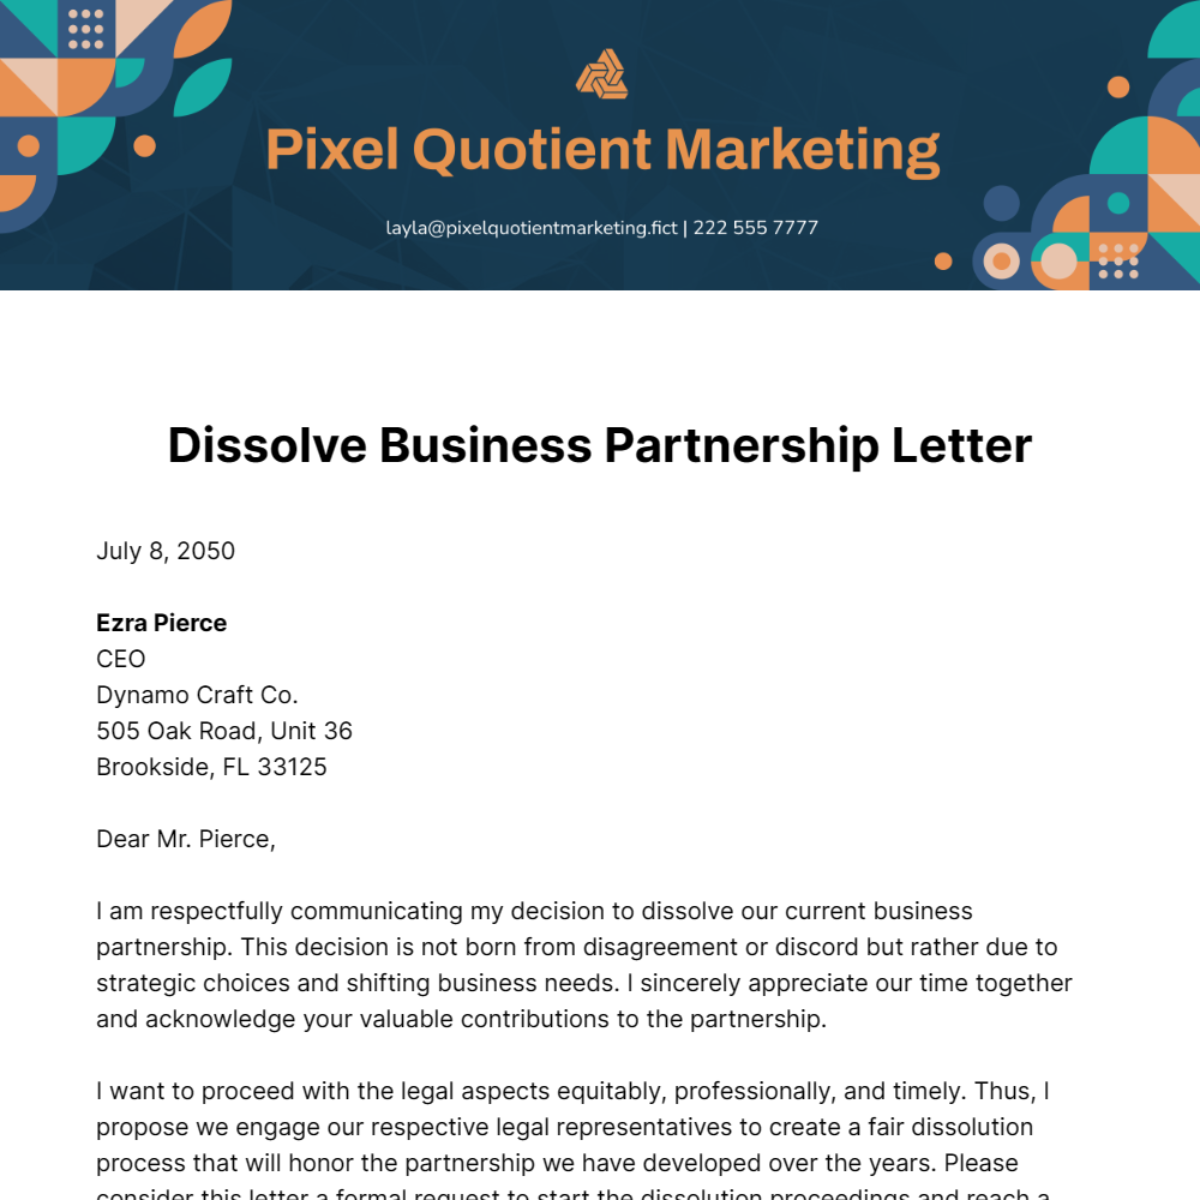 Dissolve Business Partnership Letter Template